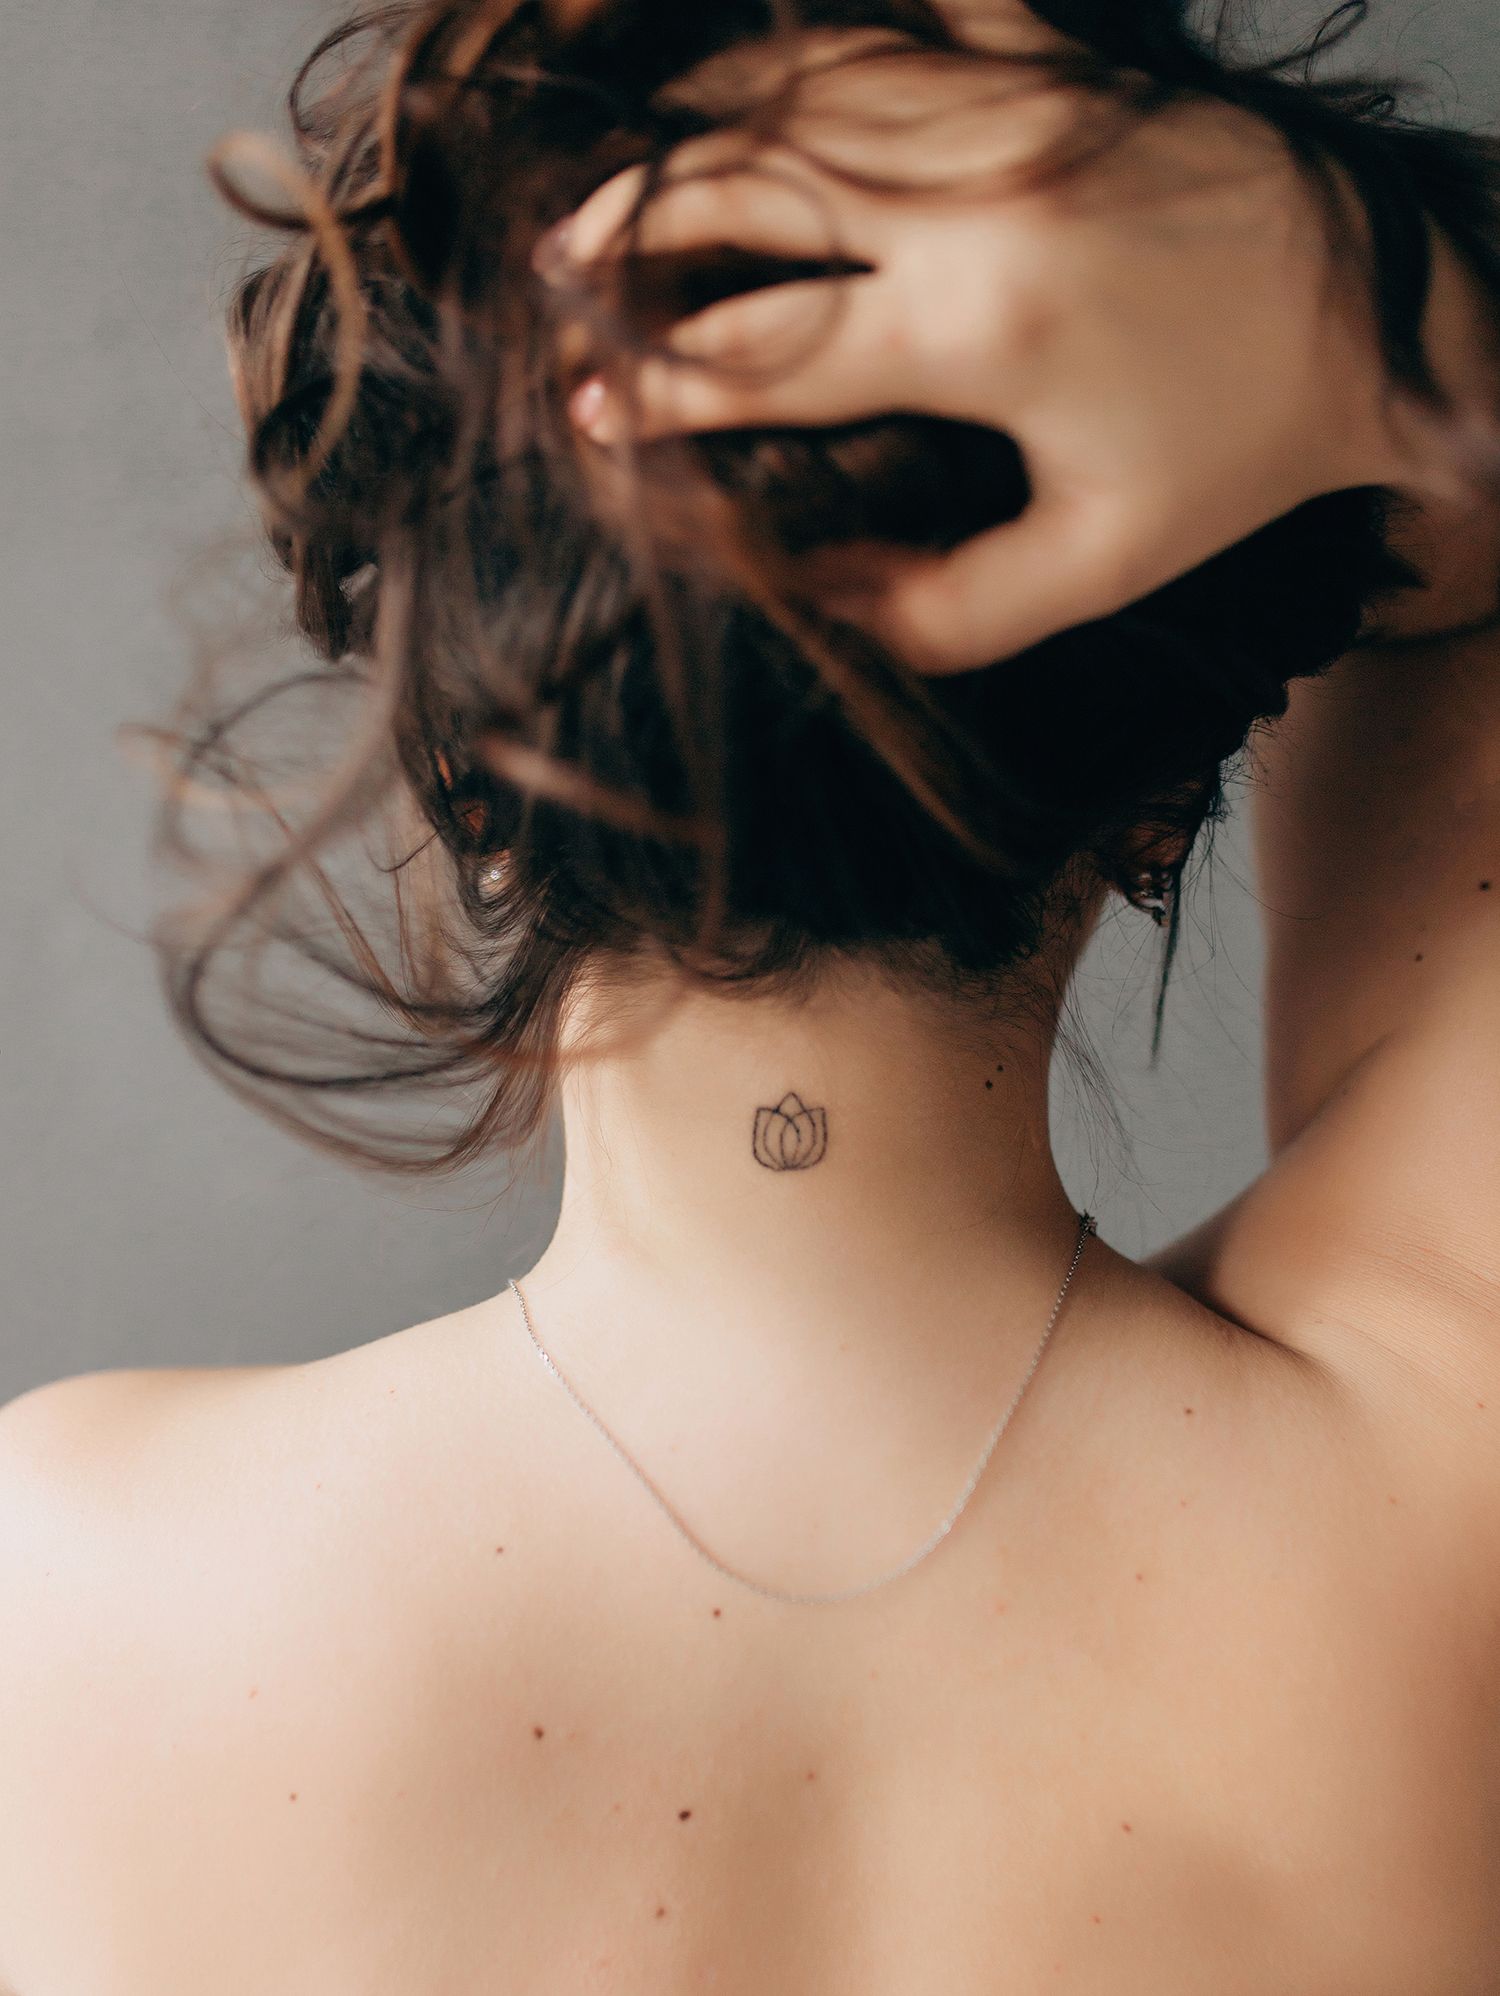 Simple tattoo idea | Intimate tattoos, Tattoos, Small tattoos